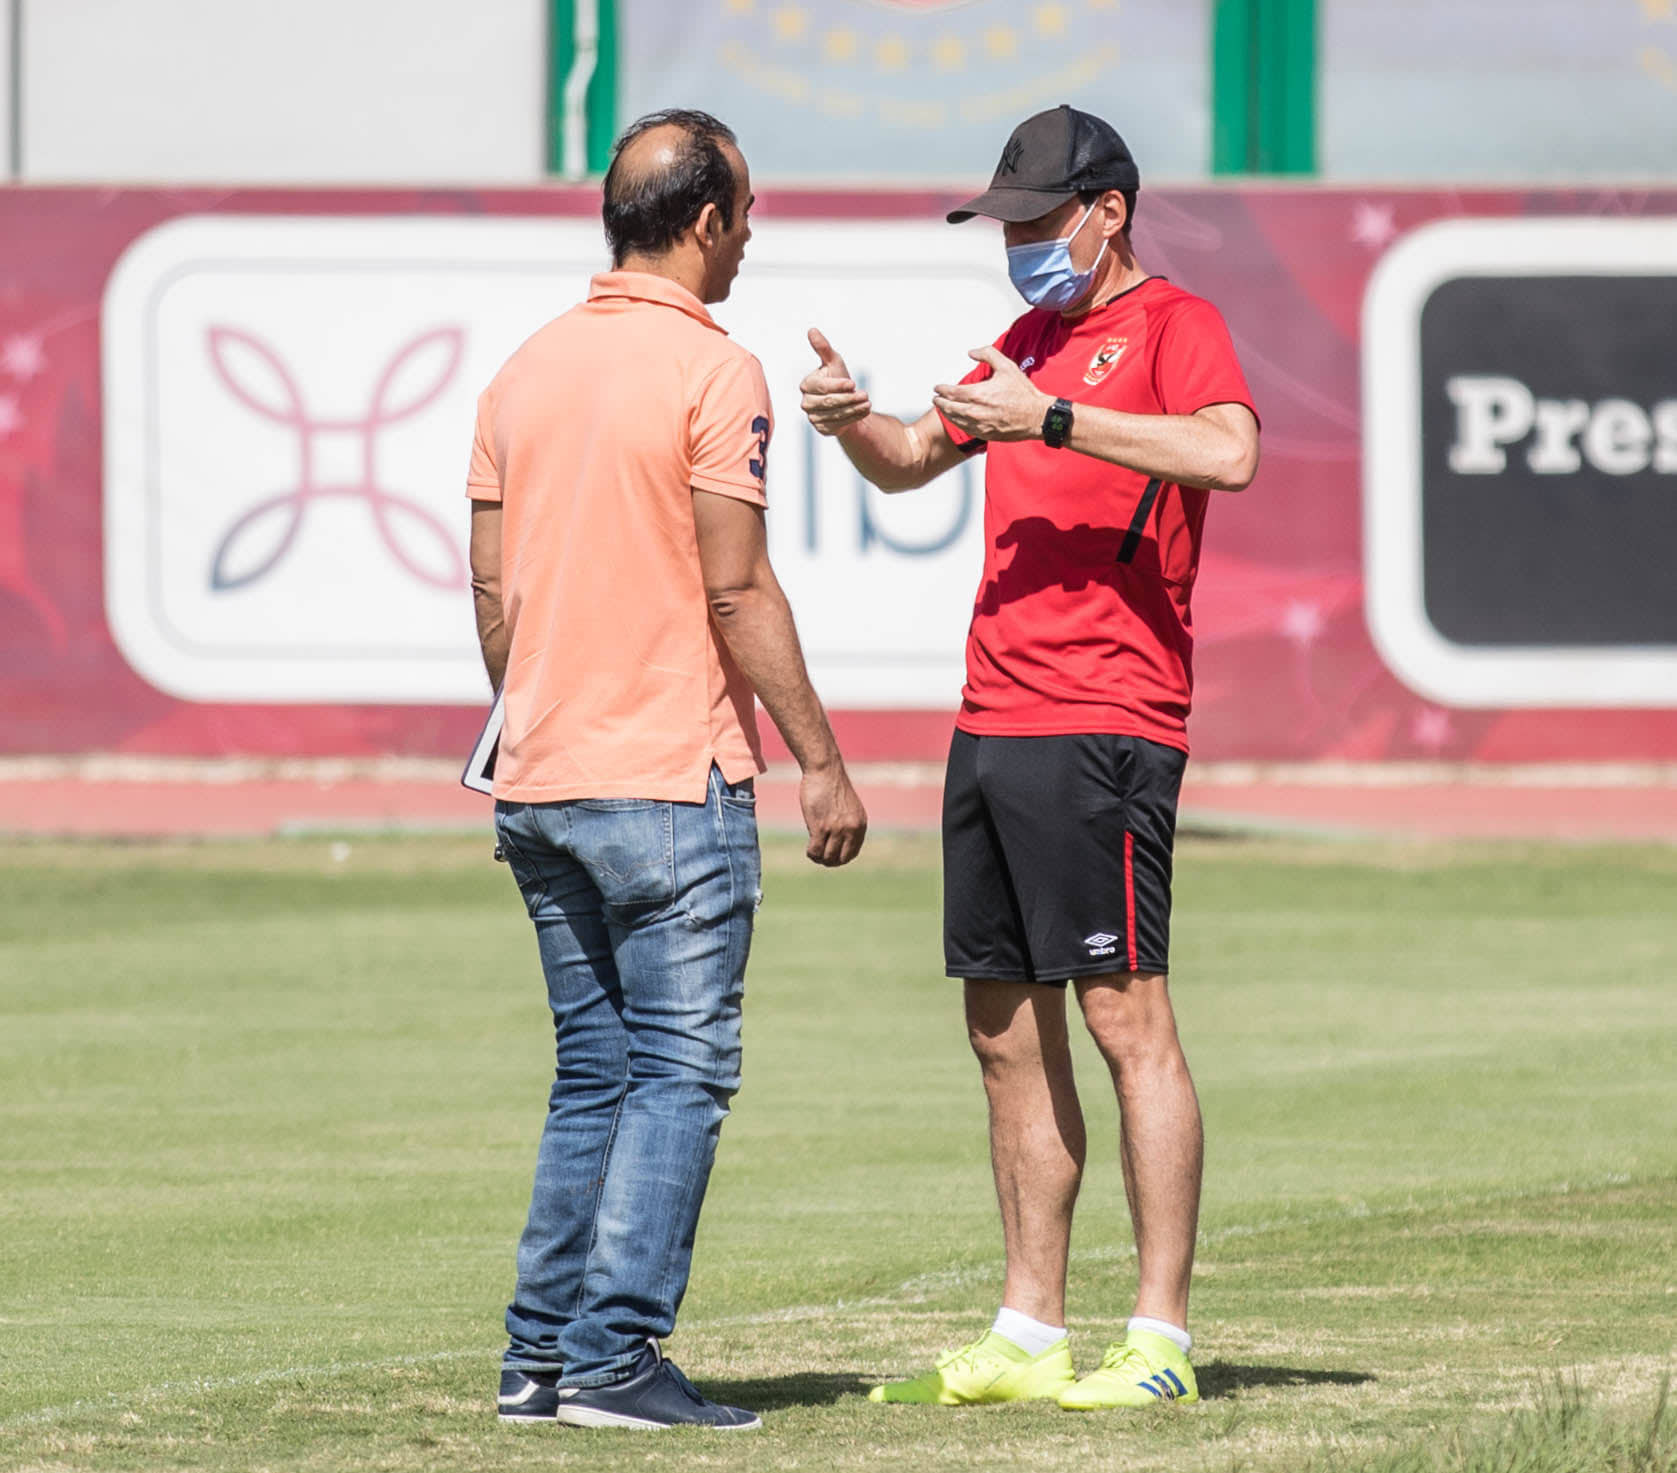 Aside from the Training: Short Meeting between Weiler and Abdelhafiz